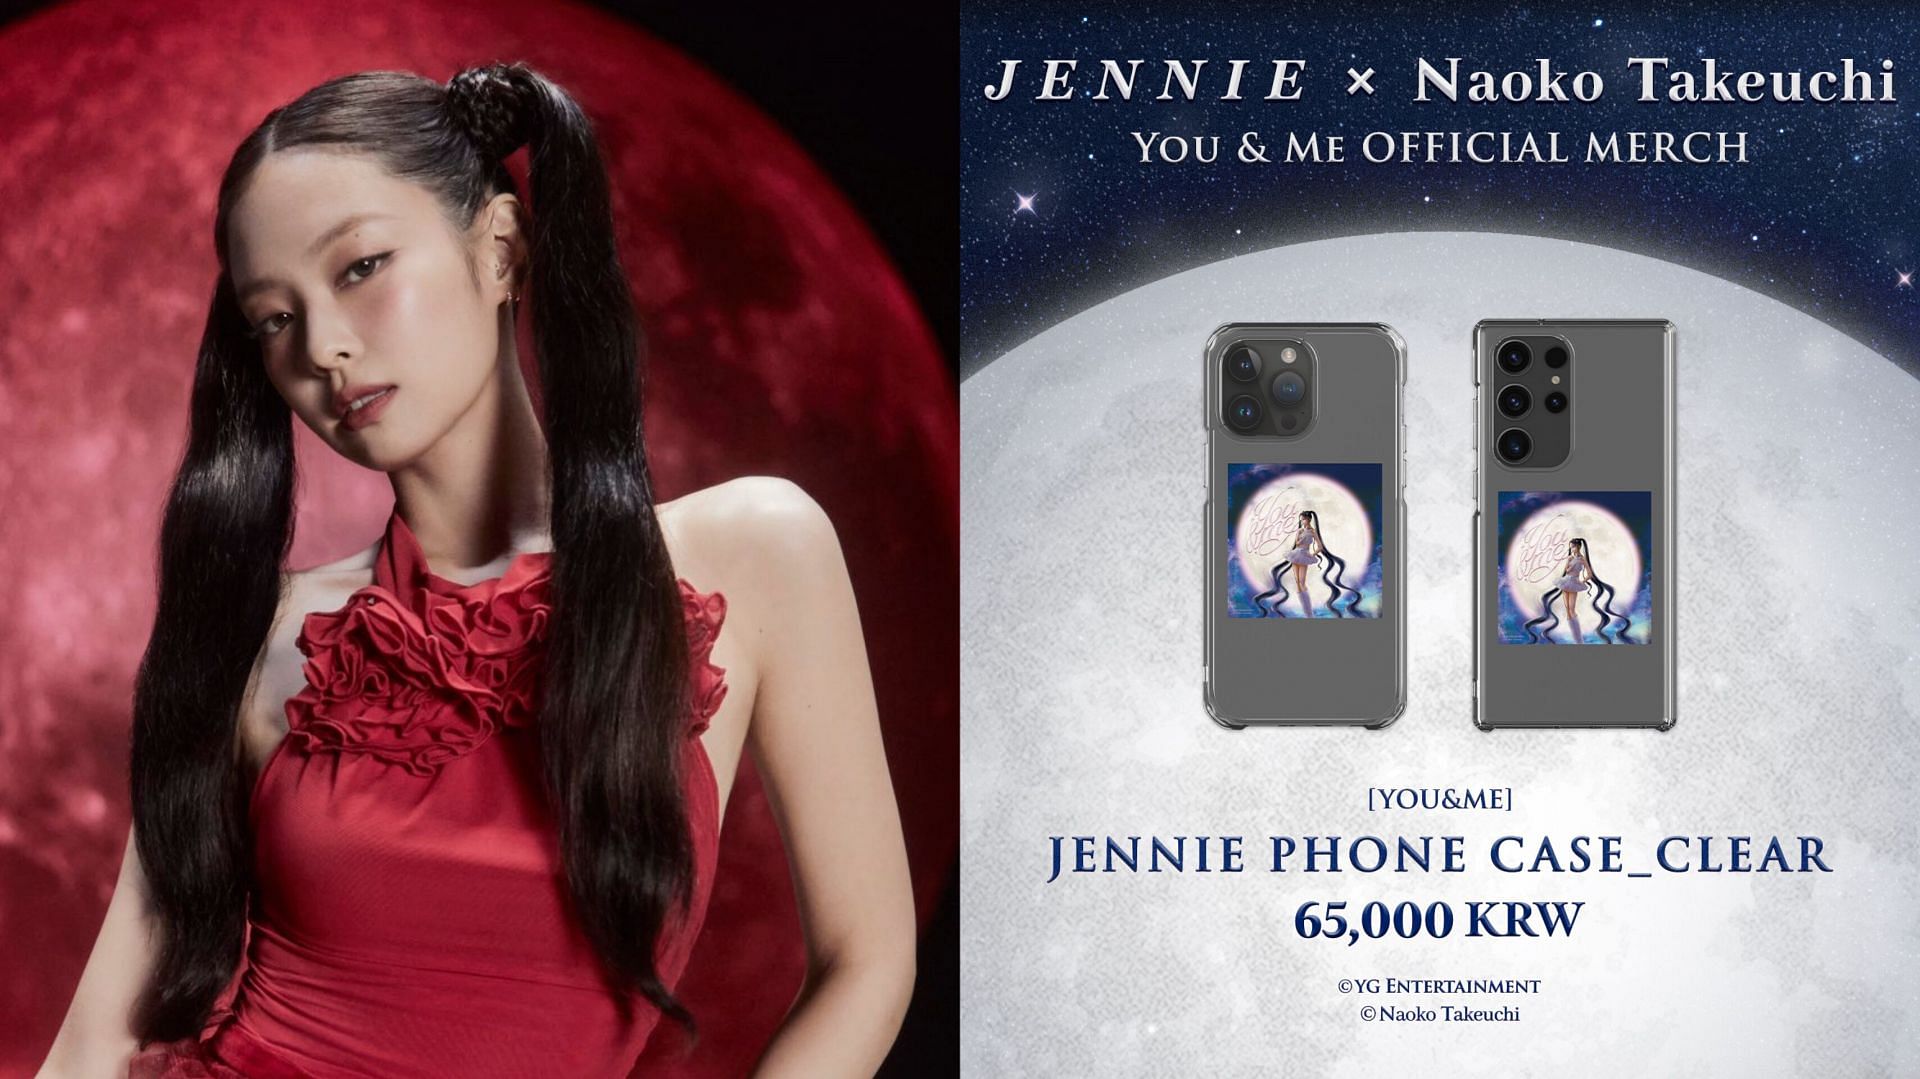 Featuring Jennie (Image via YG Entertainment)